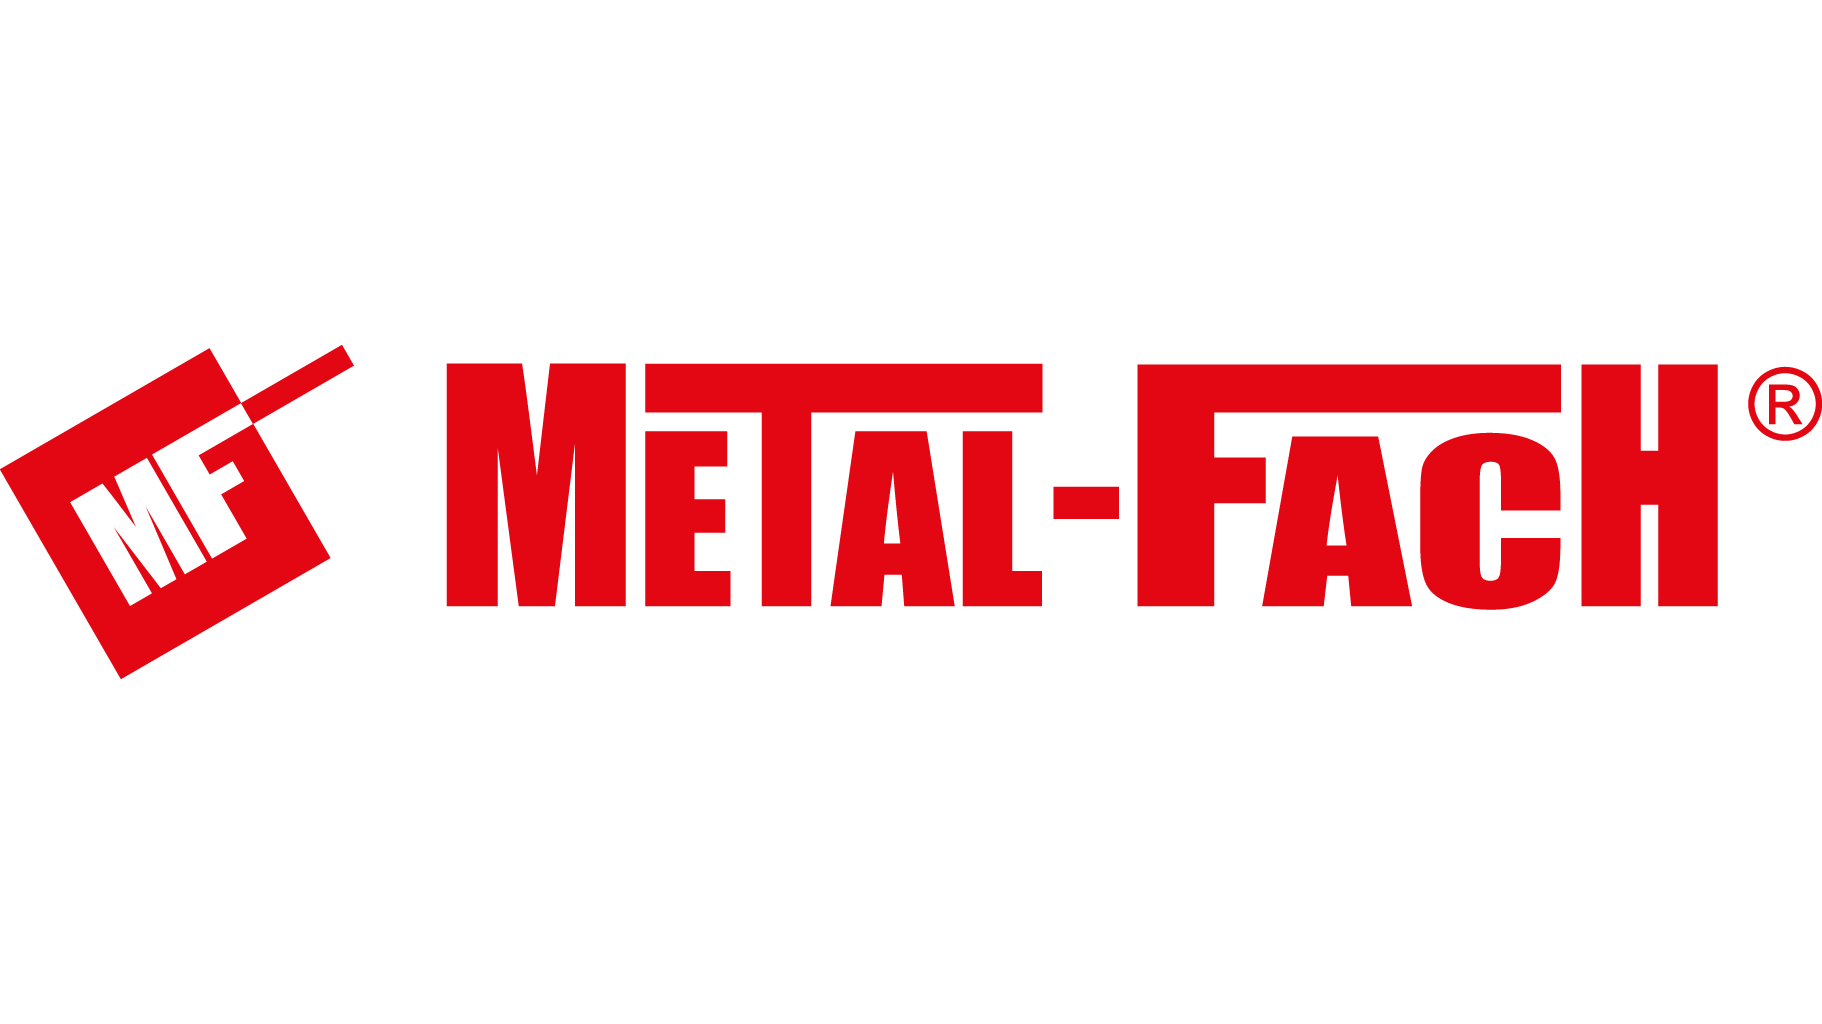 Metal-FacH